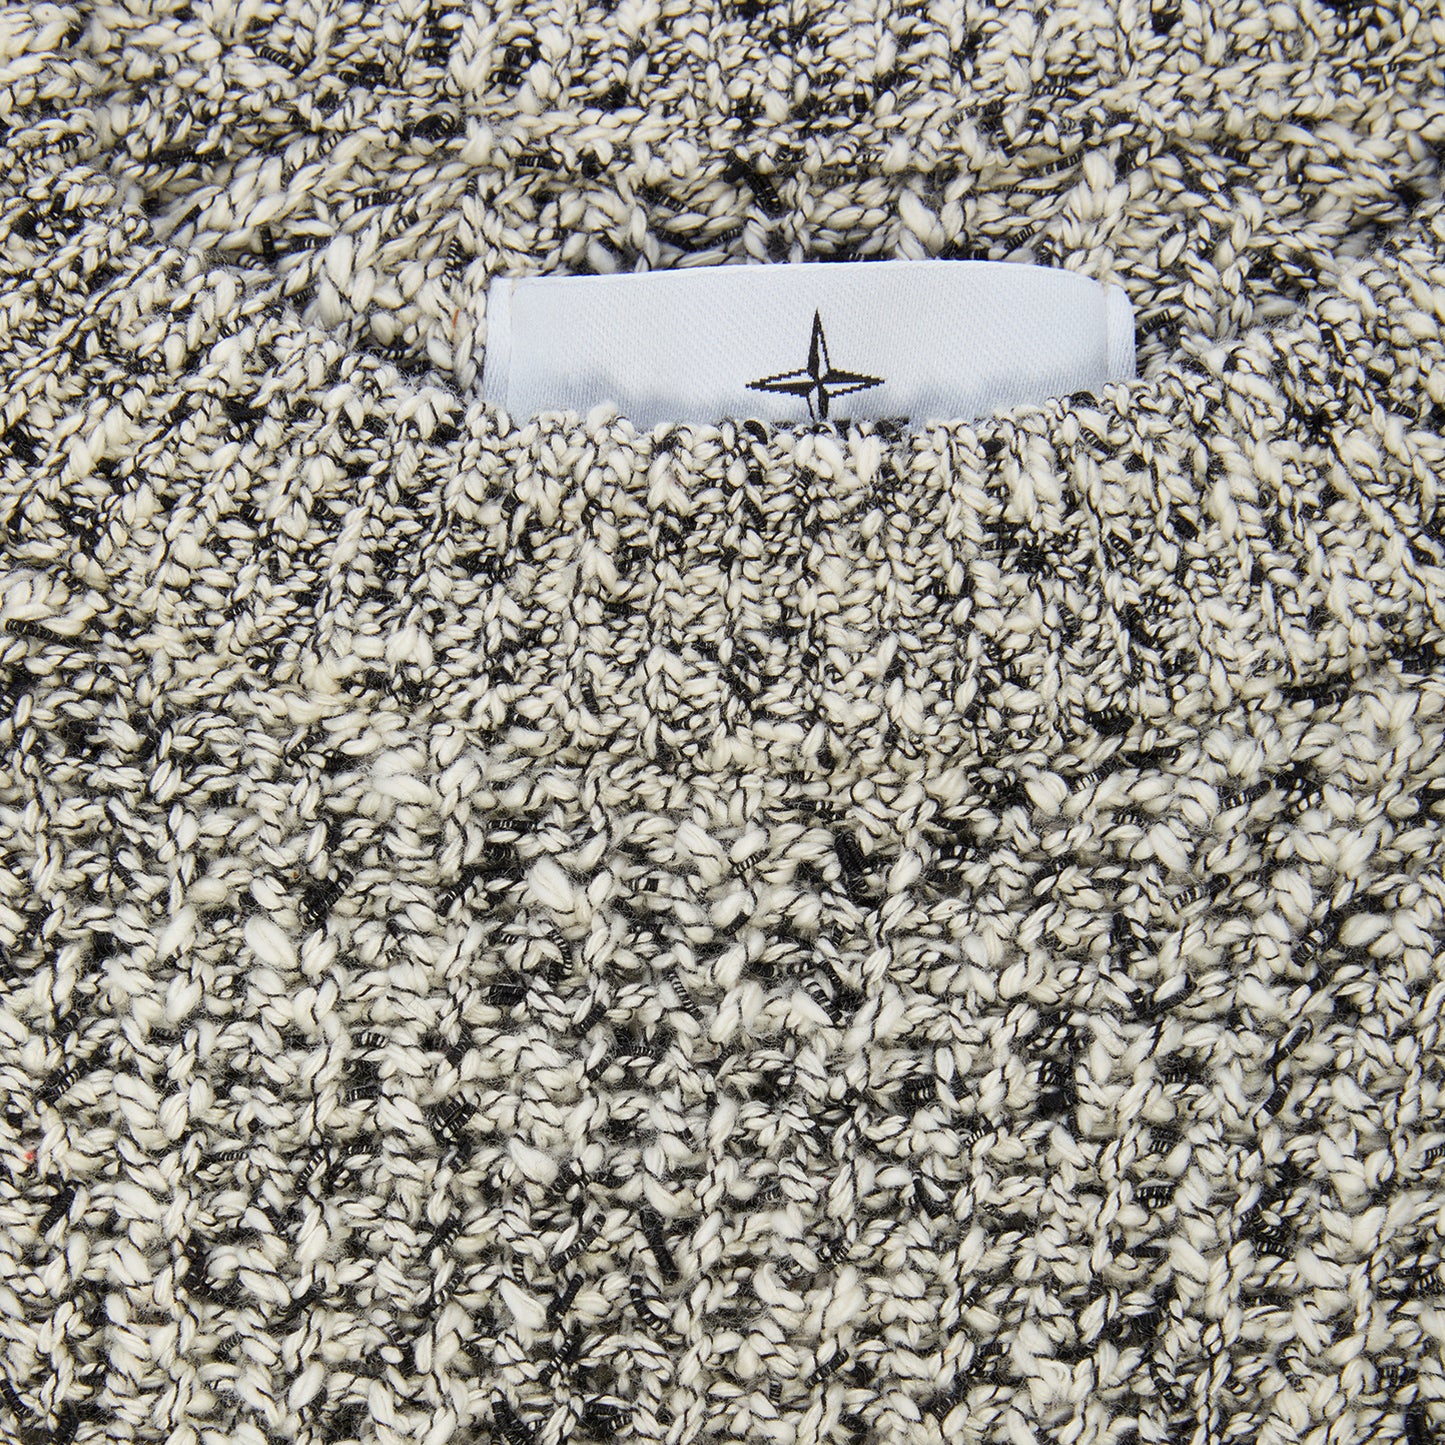 Stone Island Knit Sweater (White)